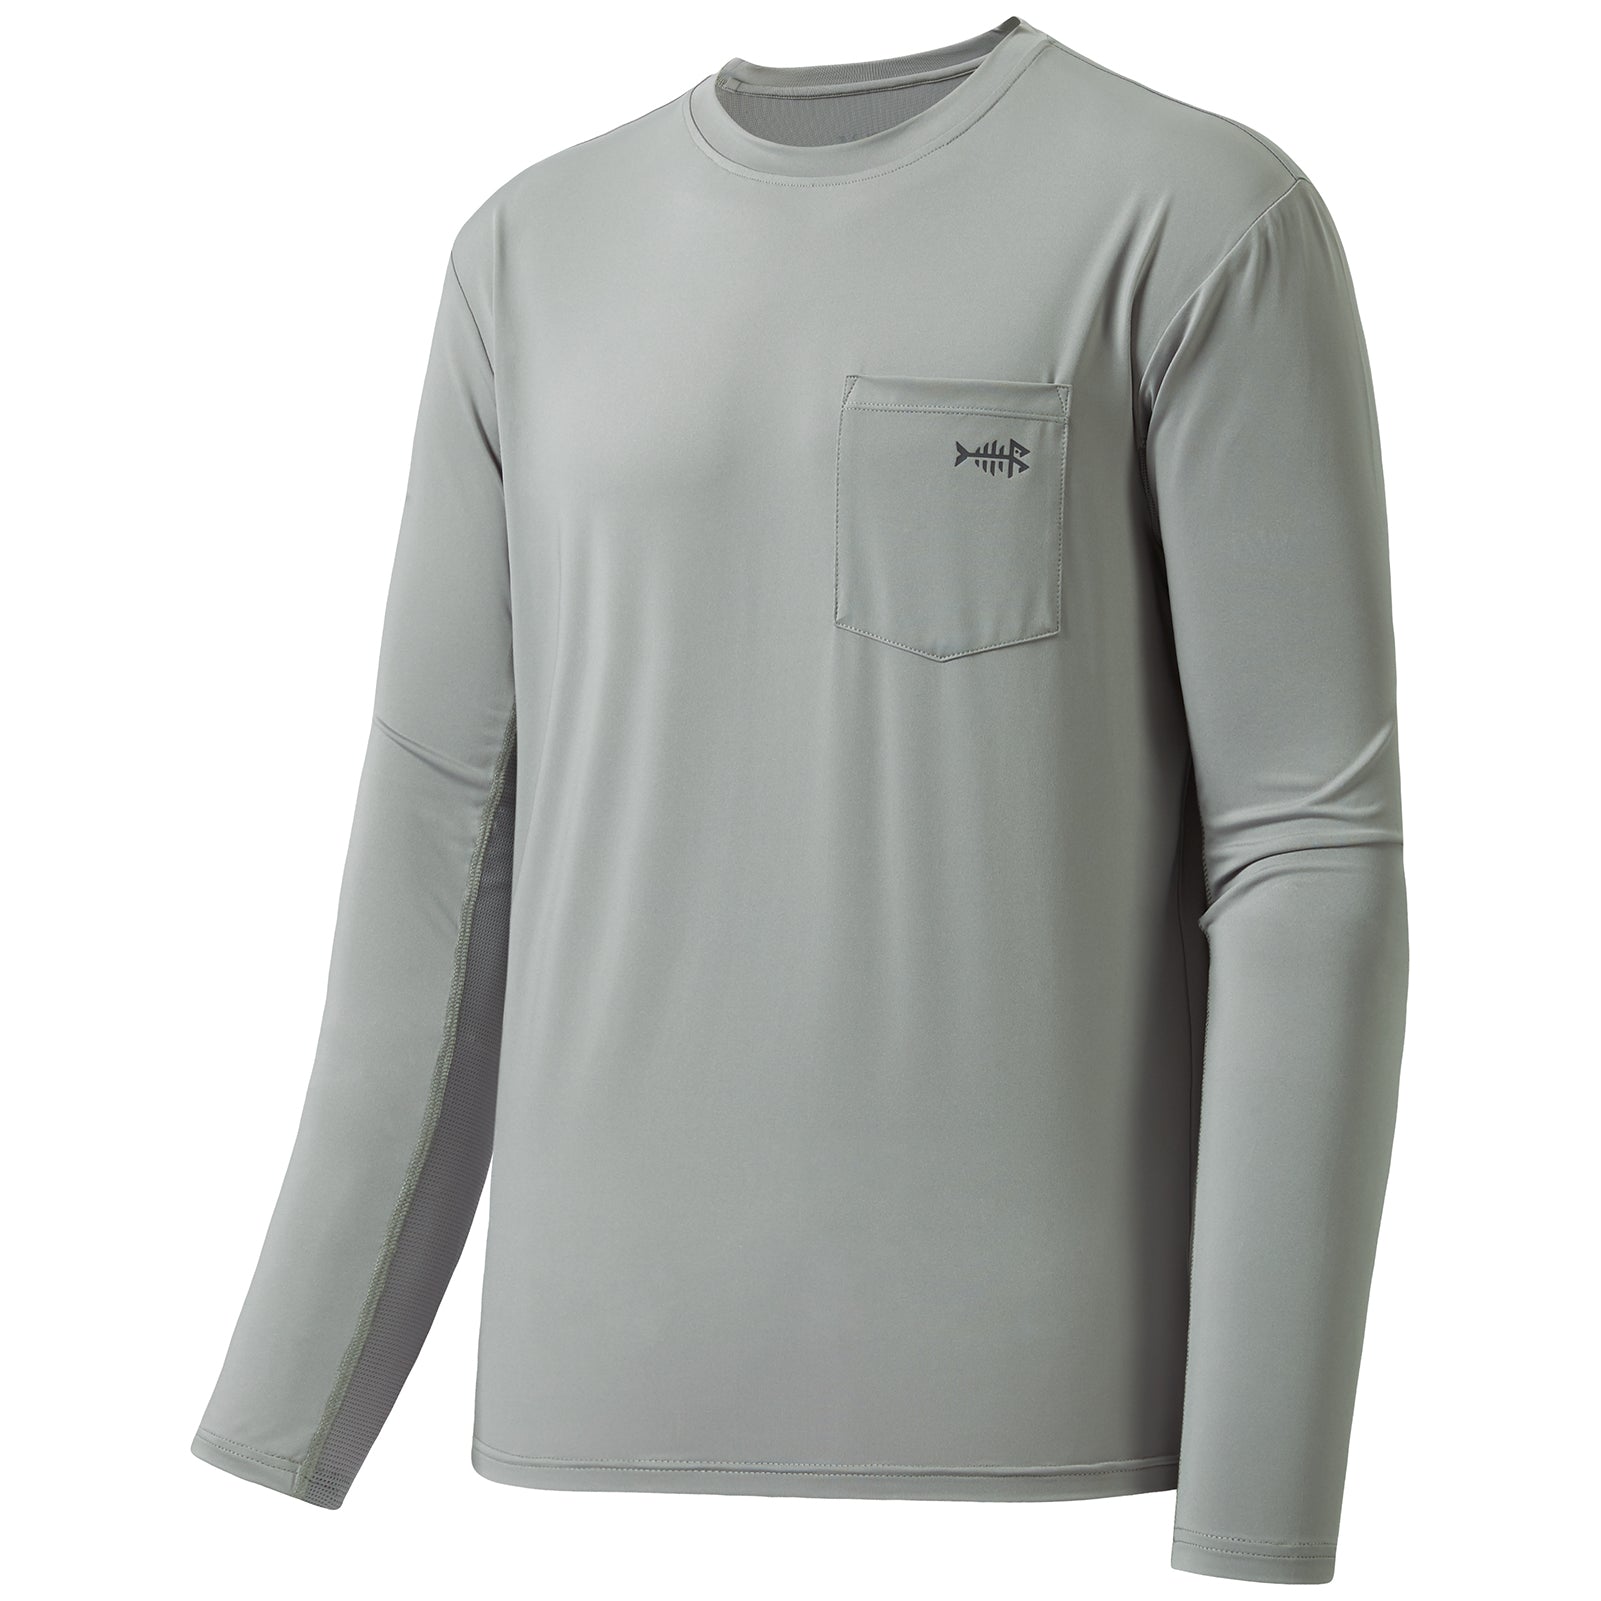 Bassdash Performance Fishing Shirt For Men UPF 50+ Long Sleeve For Fishing Hiking Outdoor Sports, Ash Grey/Dark Grey Logo / L